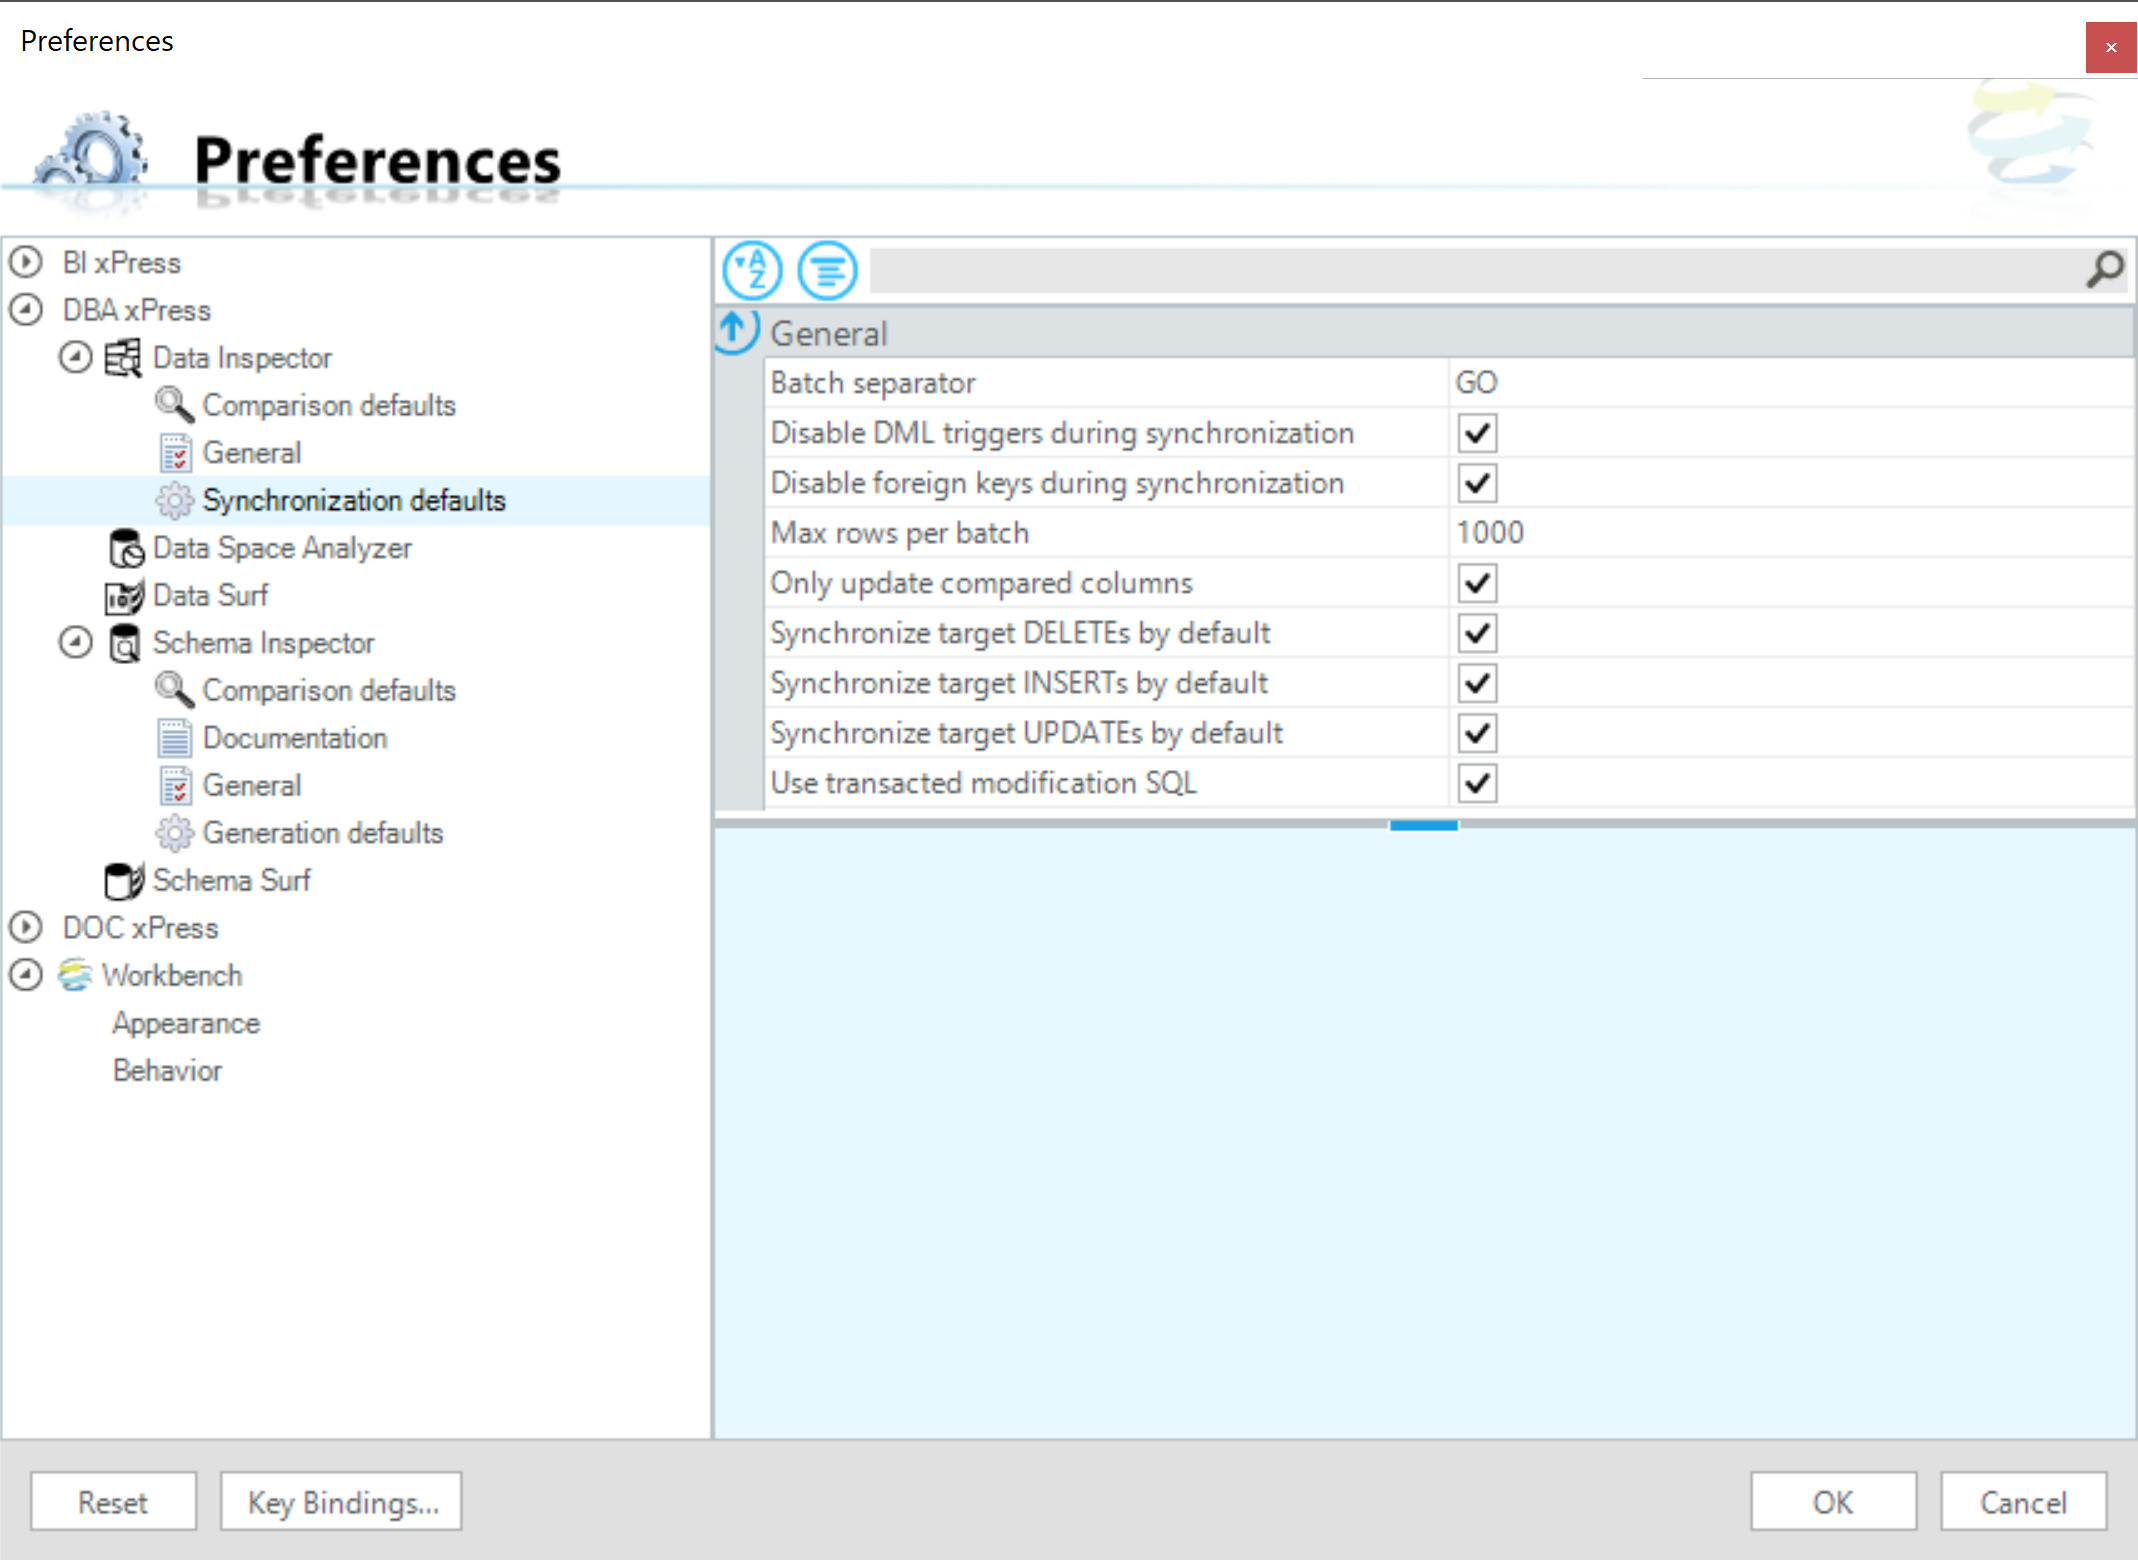 SentryOne Workbench DBA xPress Preferences Data Inspector Synchronization defaults